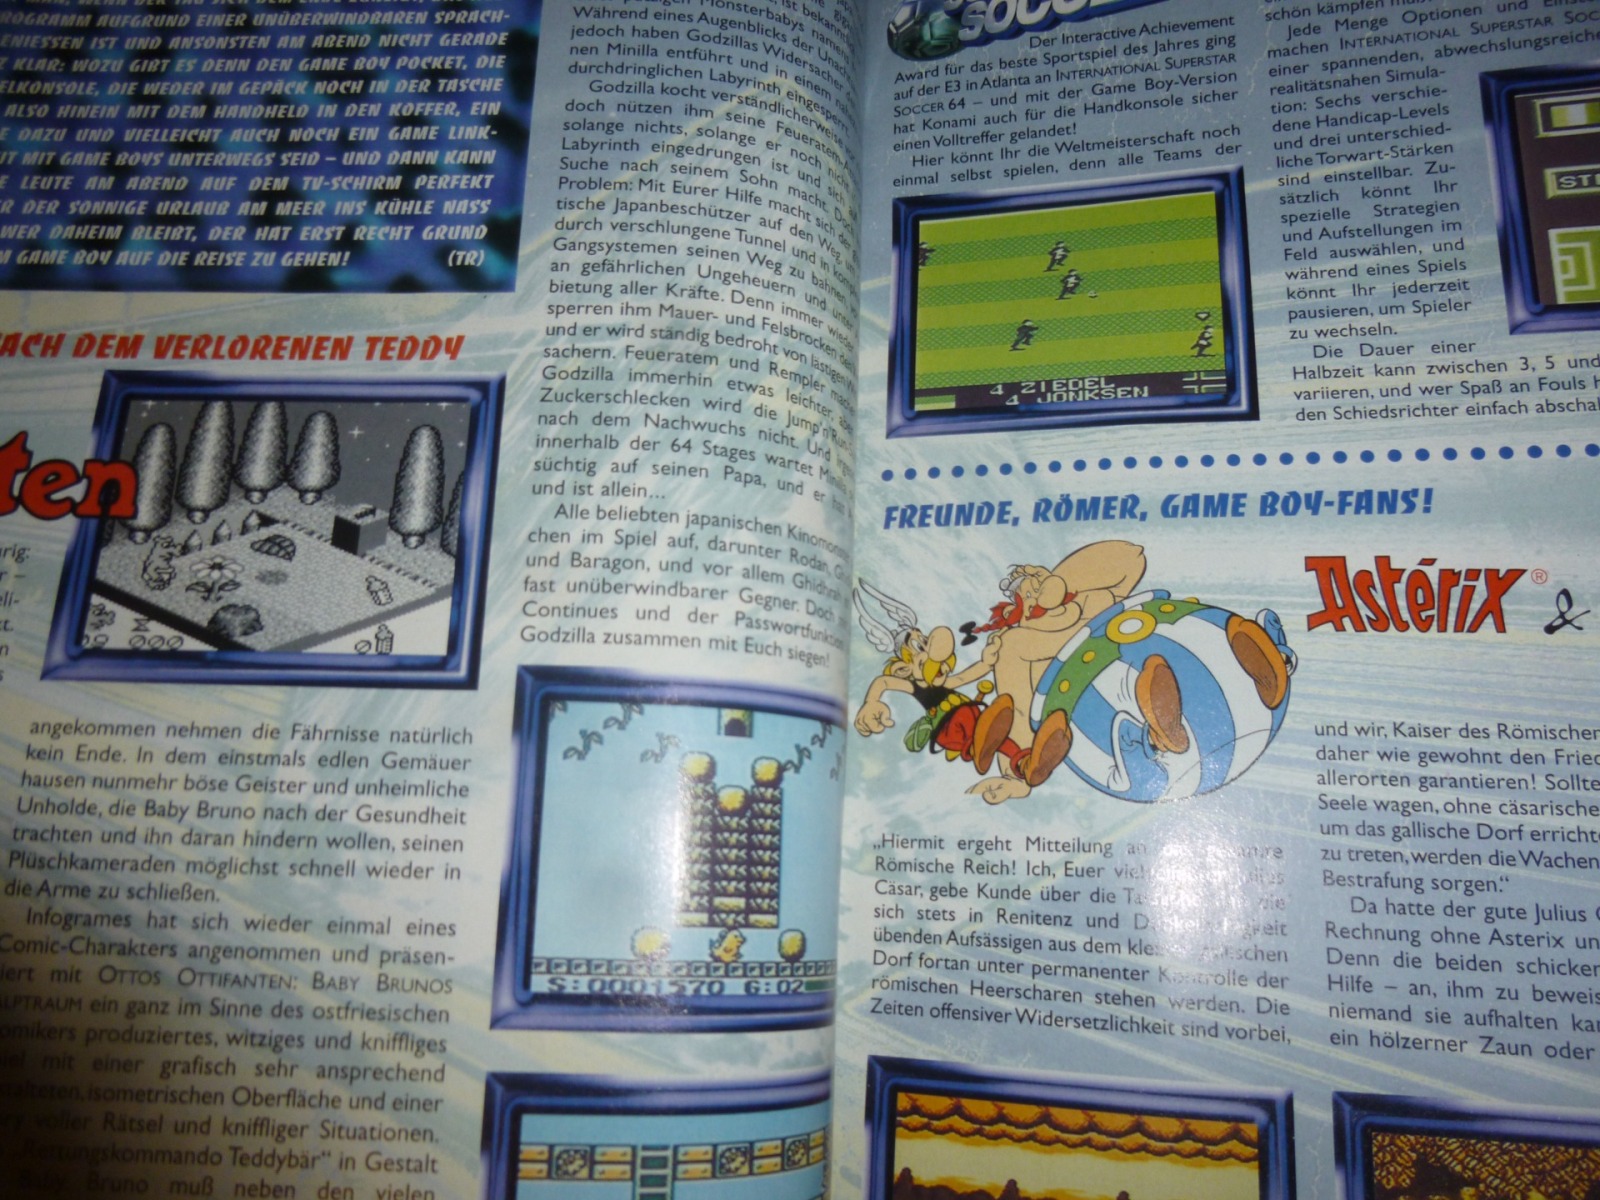 Club Nintendo - August 1998 - Jahrgang 10 - Ausgabe 4 13